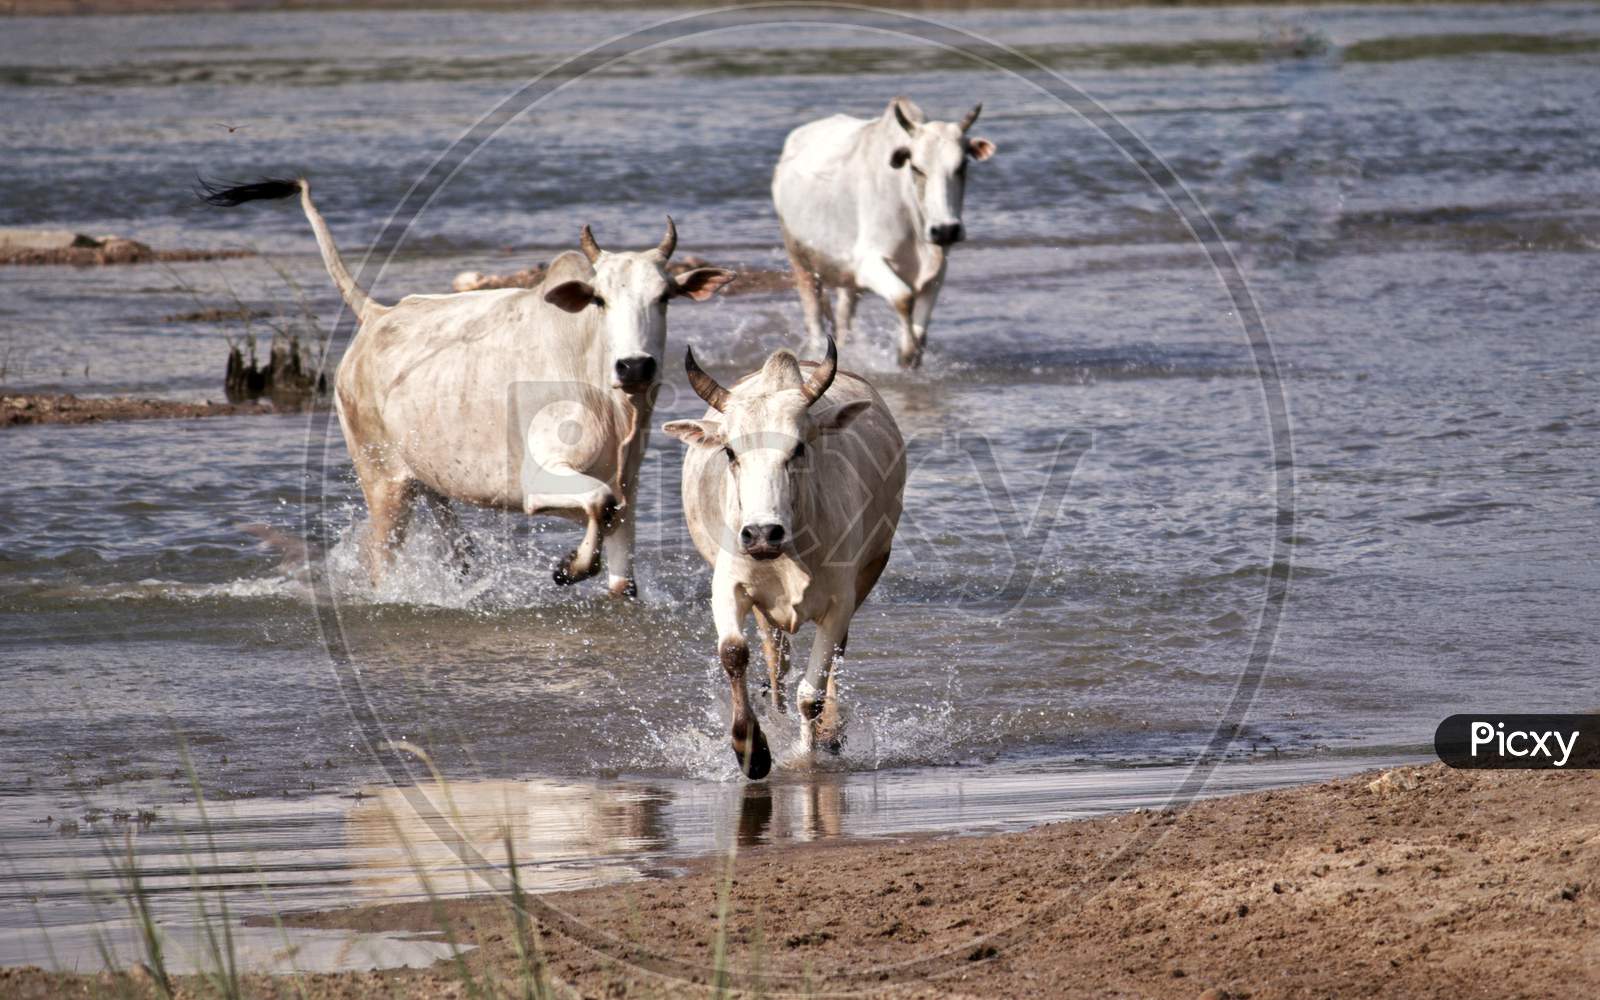 Bulls Running Through River Water To Cross